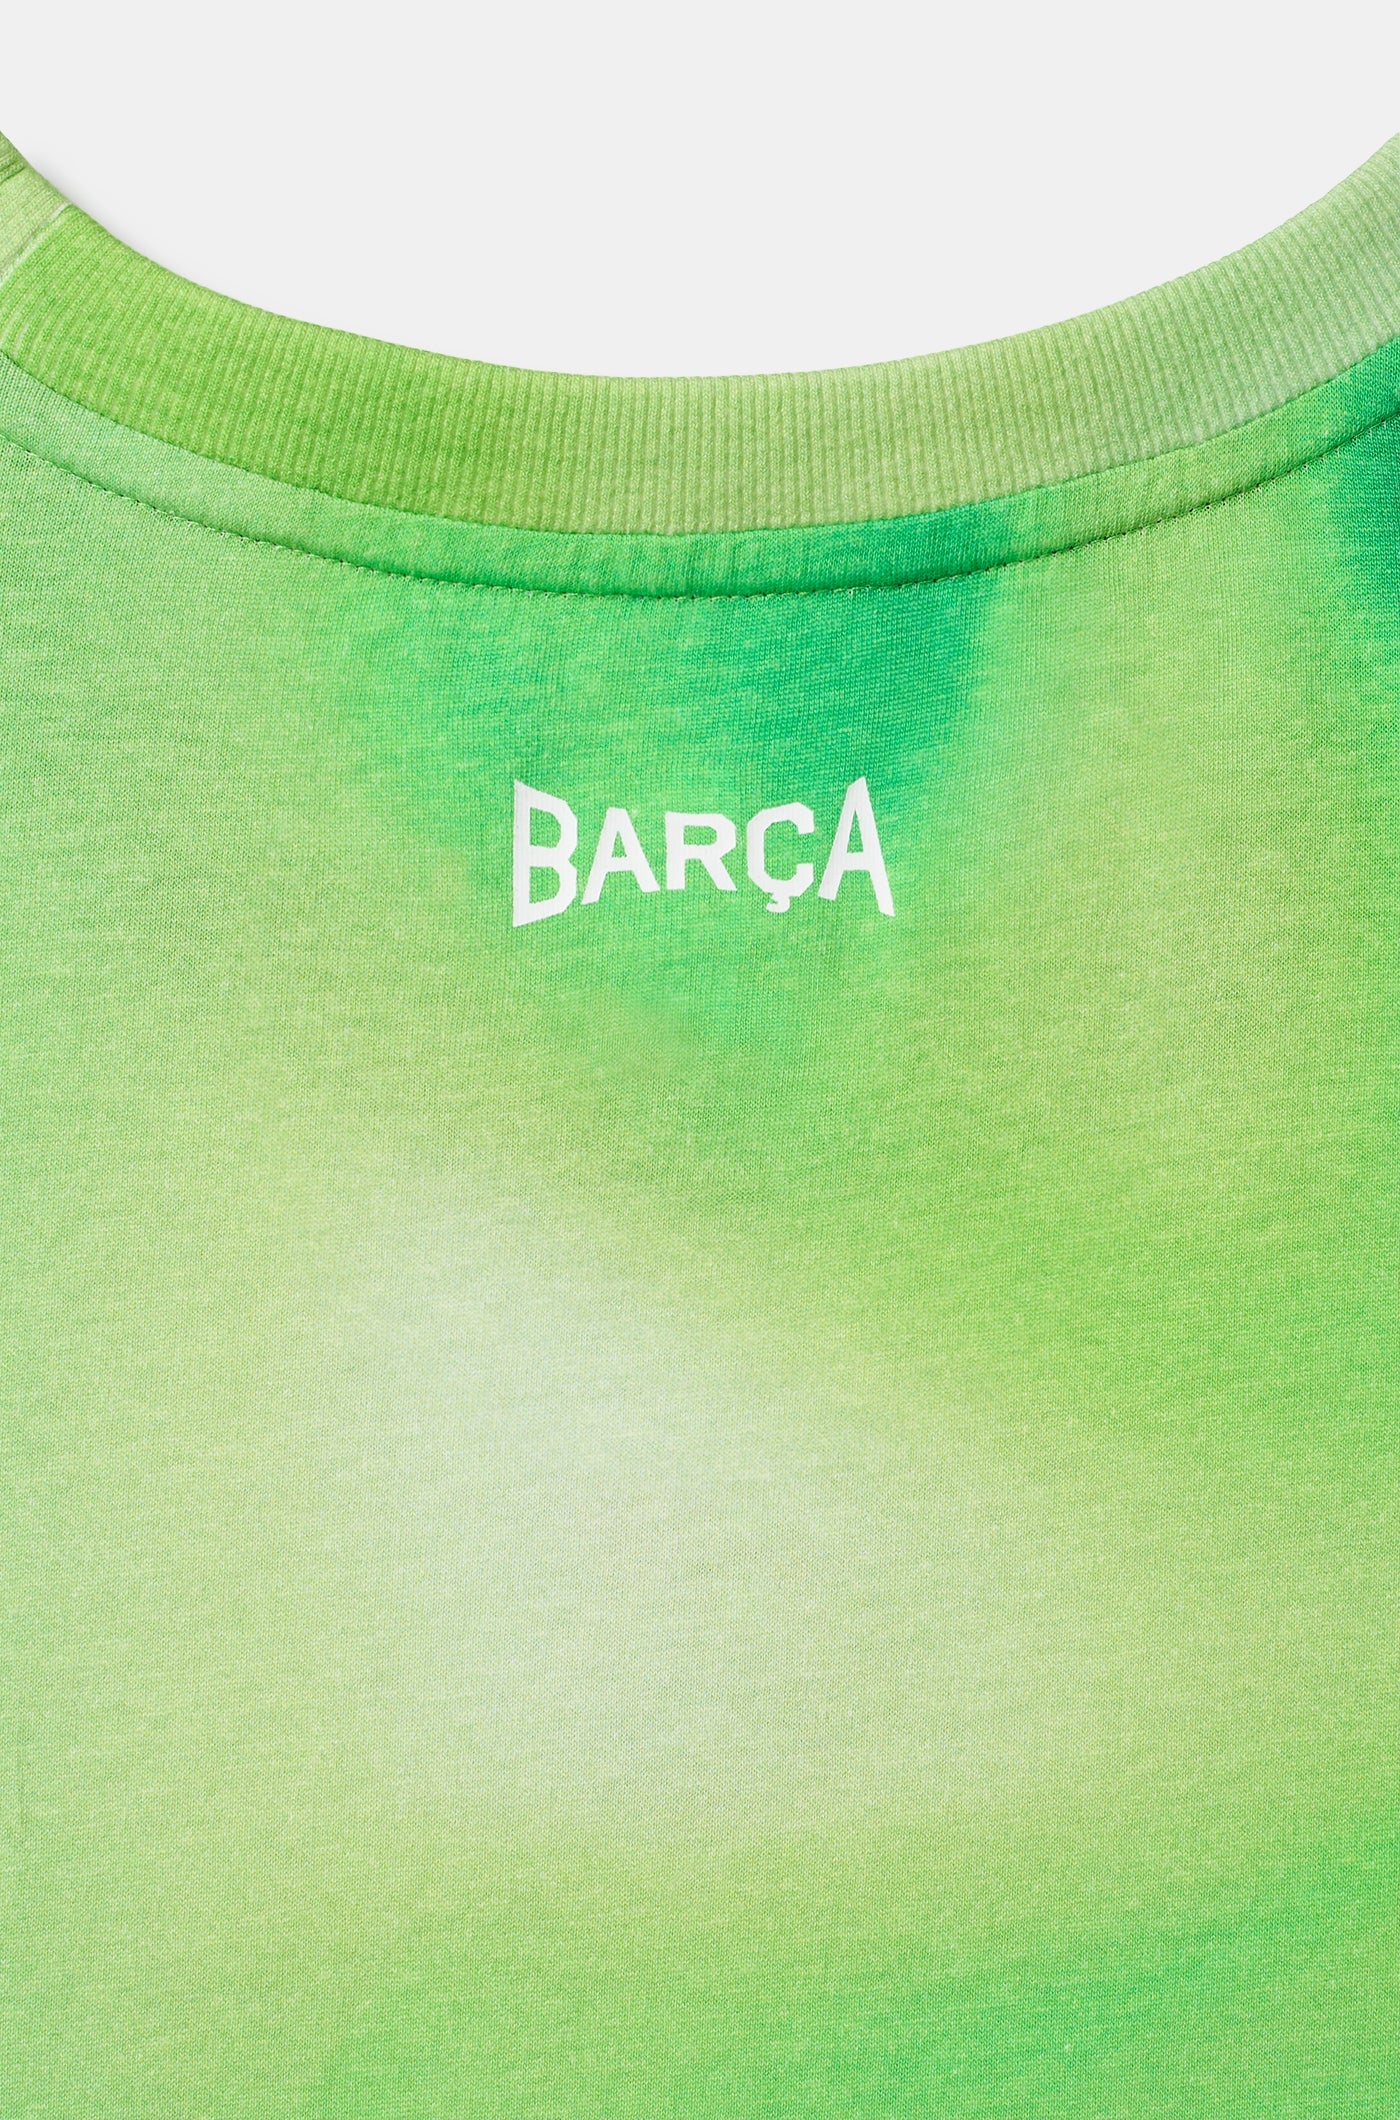 Tank top green Barça - Woman